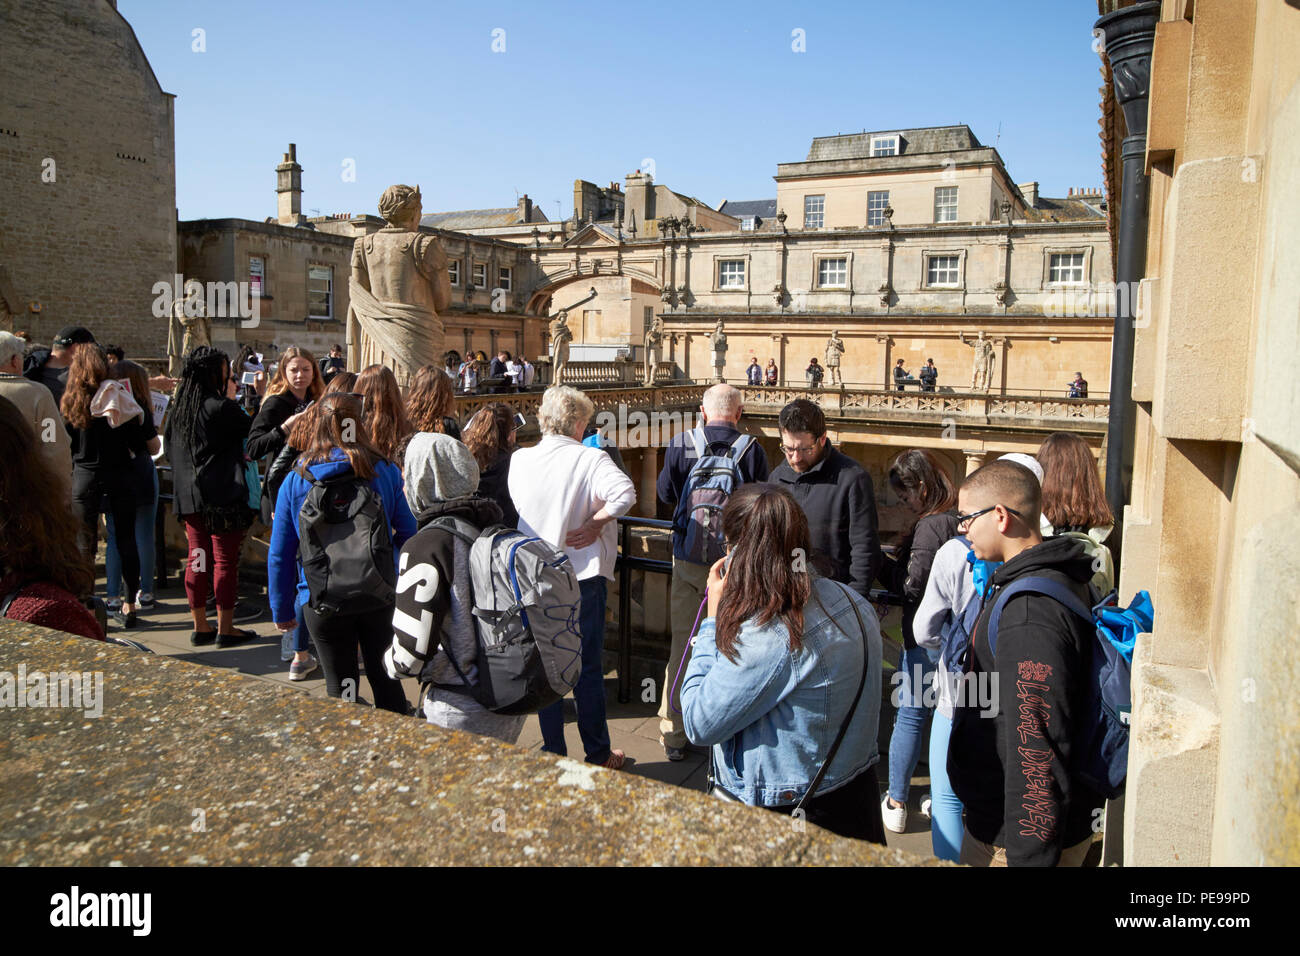 tourists visit the roman baths Bath England UK Stock Photo